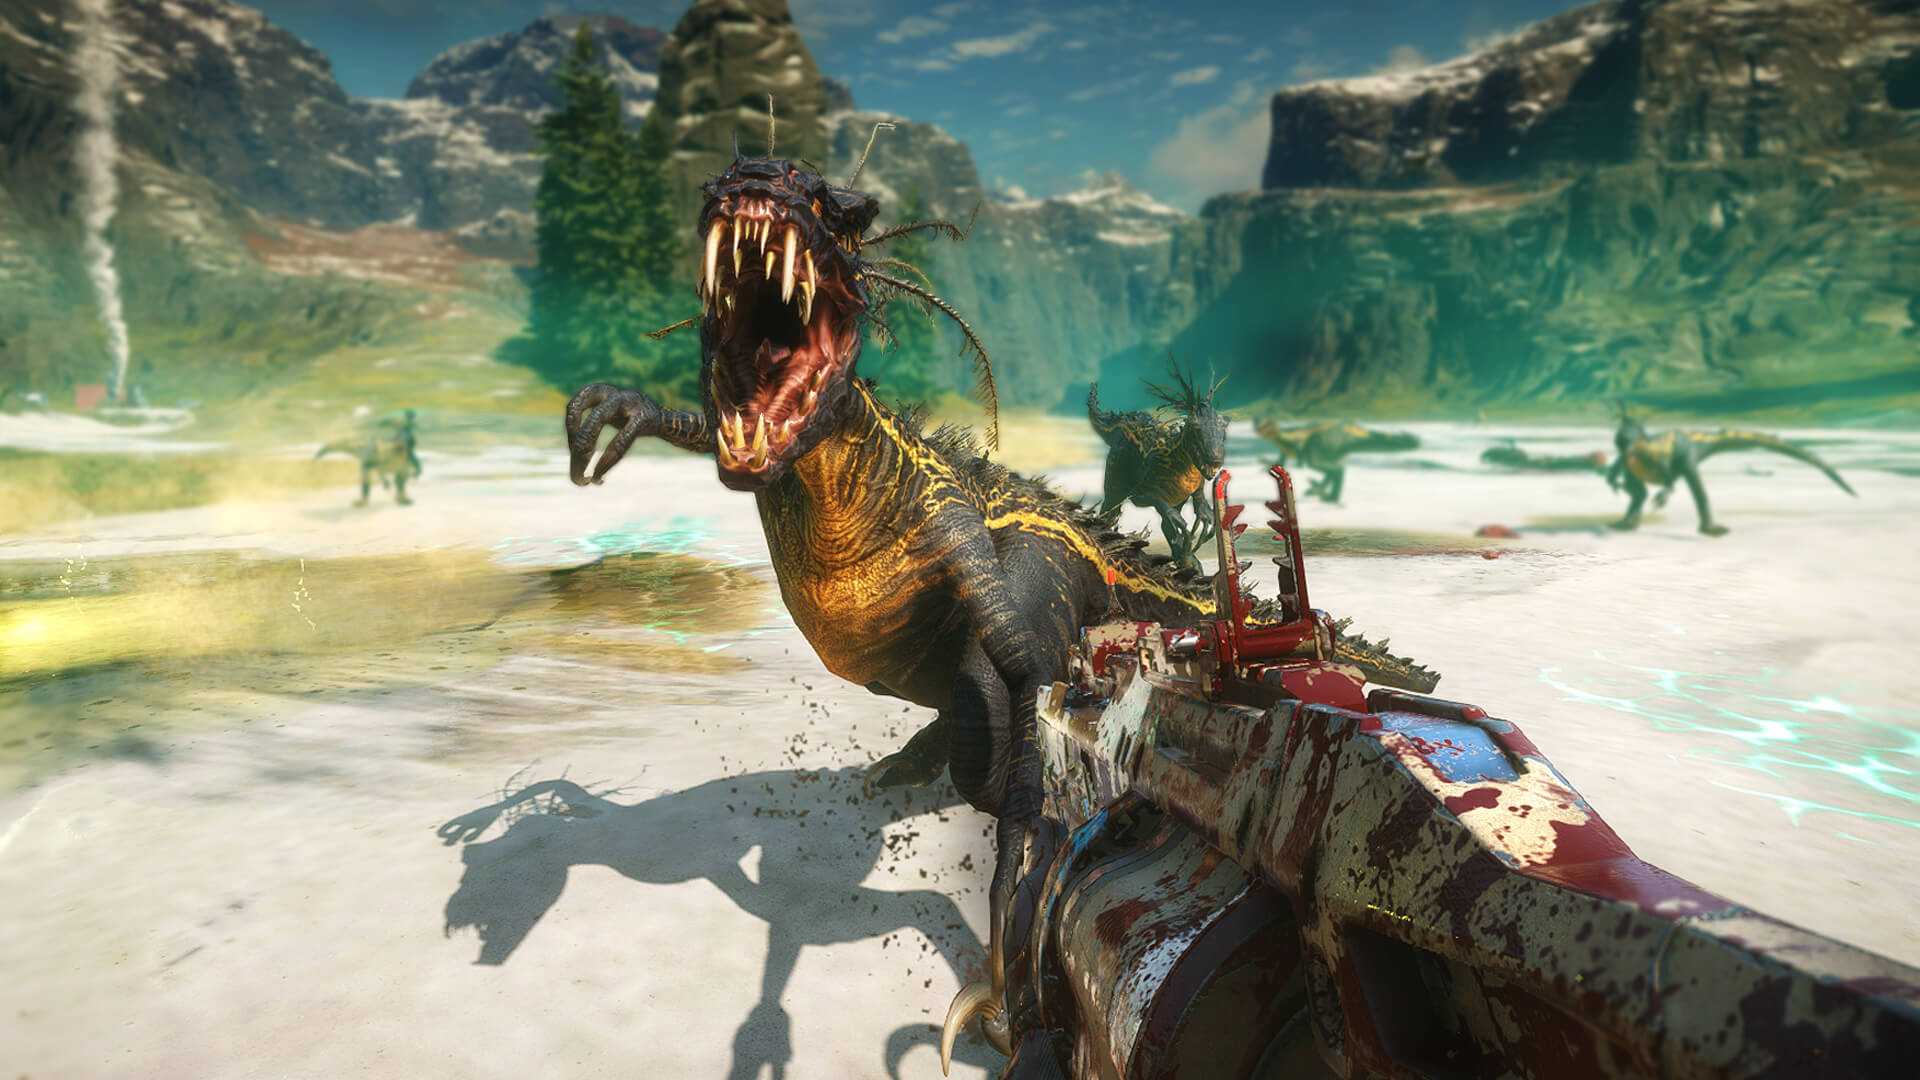 Second Extinction Featured In Gamesindustry.biz Article